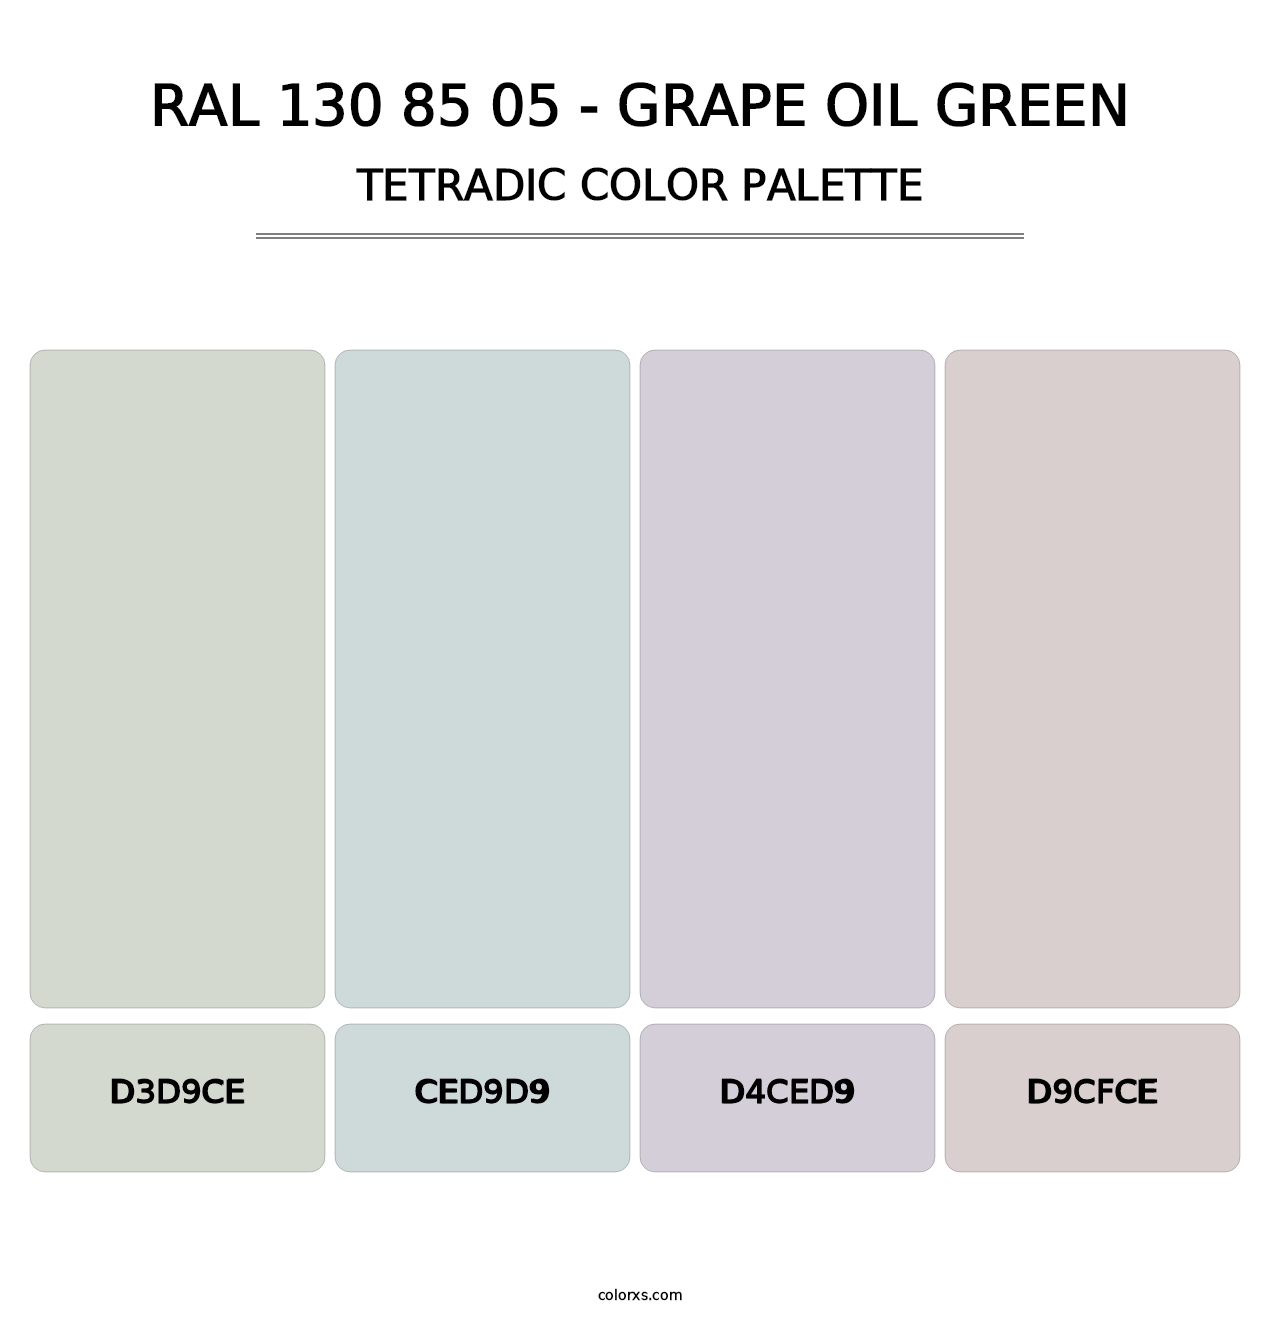 RAL 130 85 05 - Grape Oil Green - Tetradic Color Palette